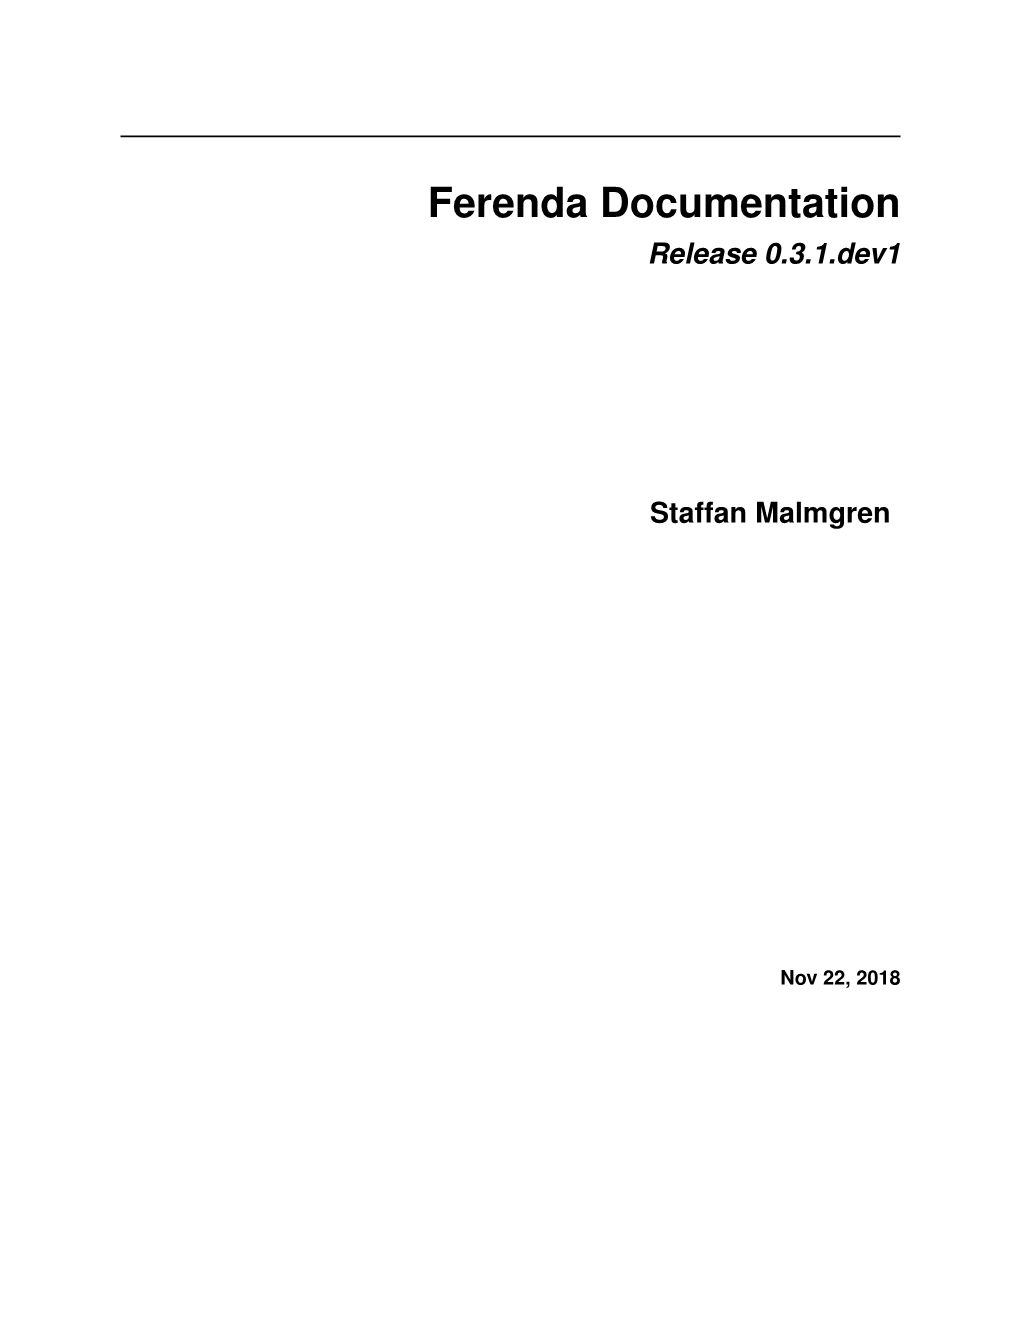 Ferenda Documentation Release 0.3.1.Dev1